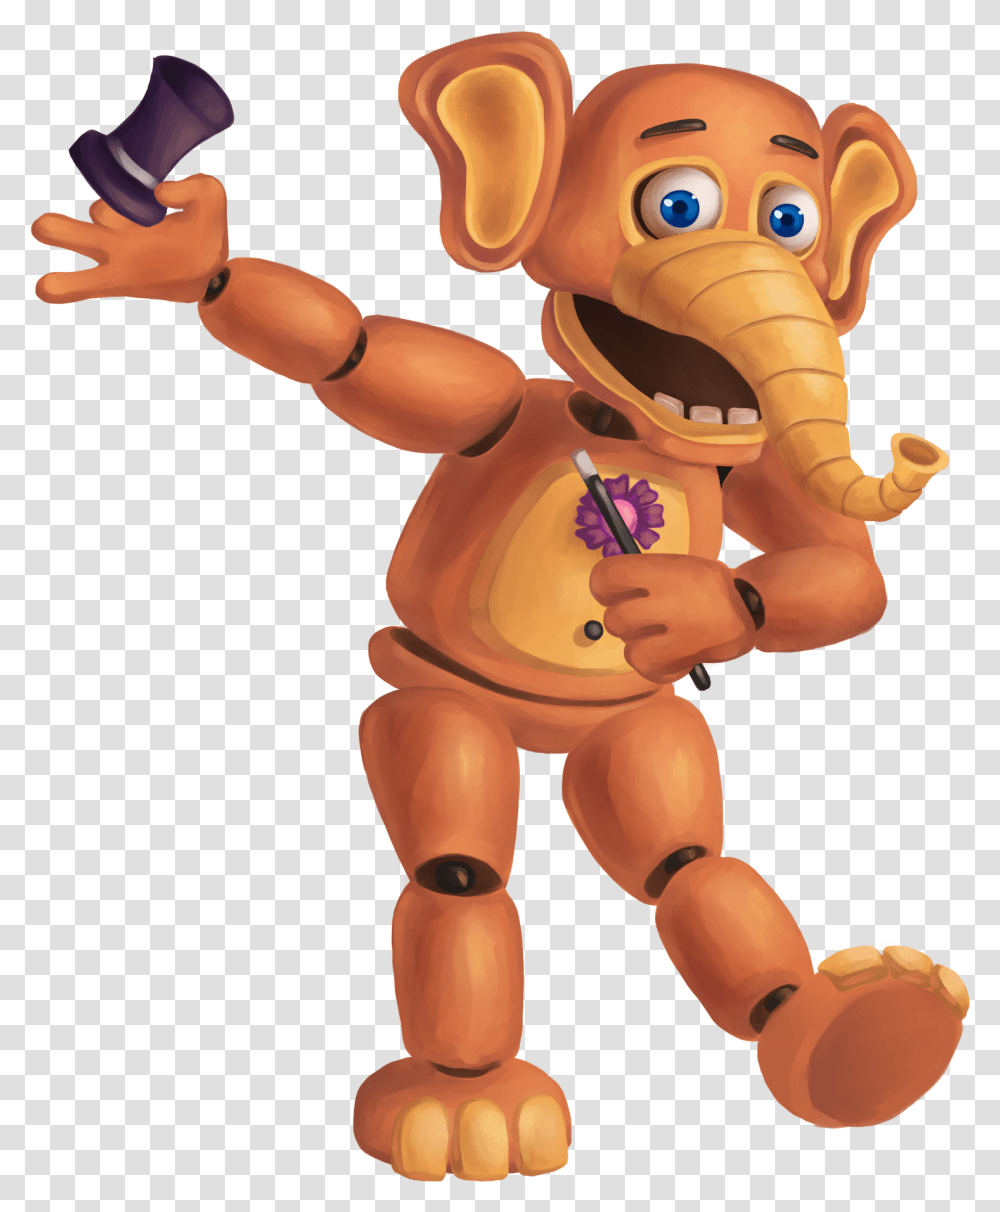 Cartoon Elephant Cartoon Elephant, Toy, Animal, Figurine, Doll Transparent Png